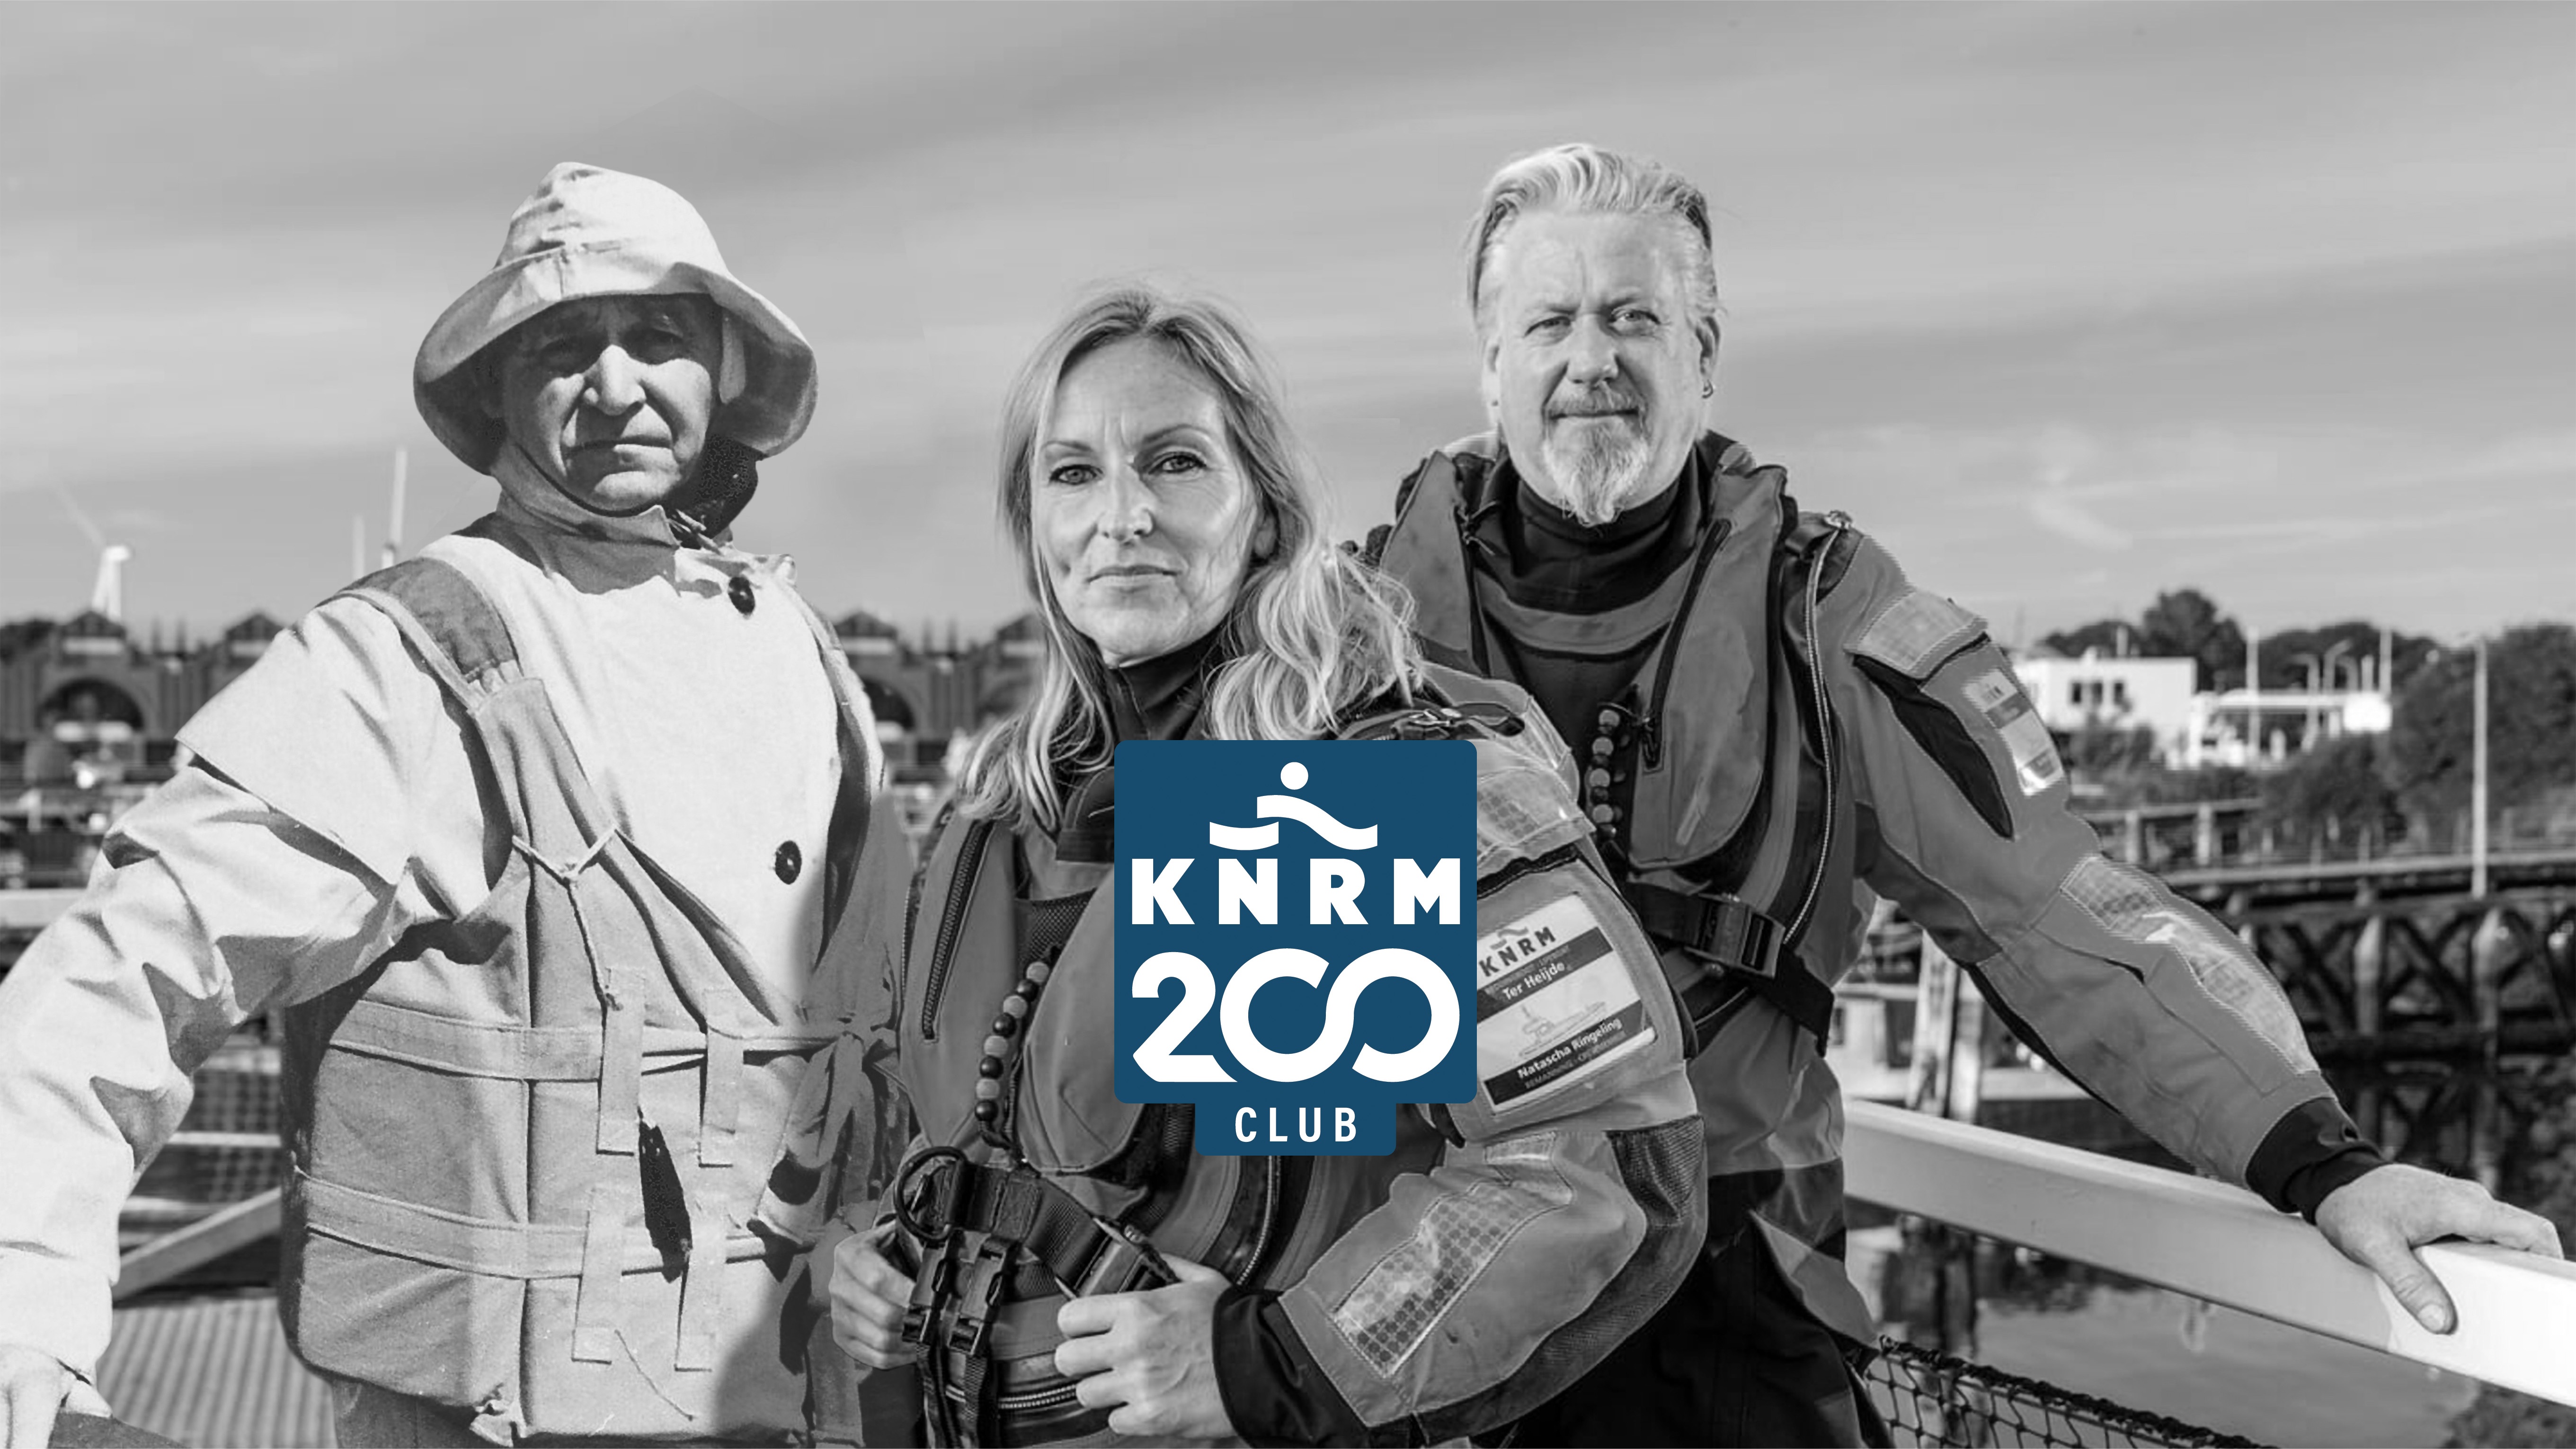 KNRM 200 club